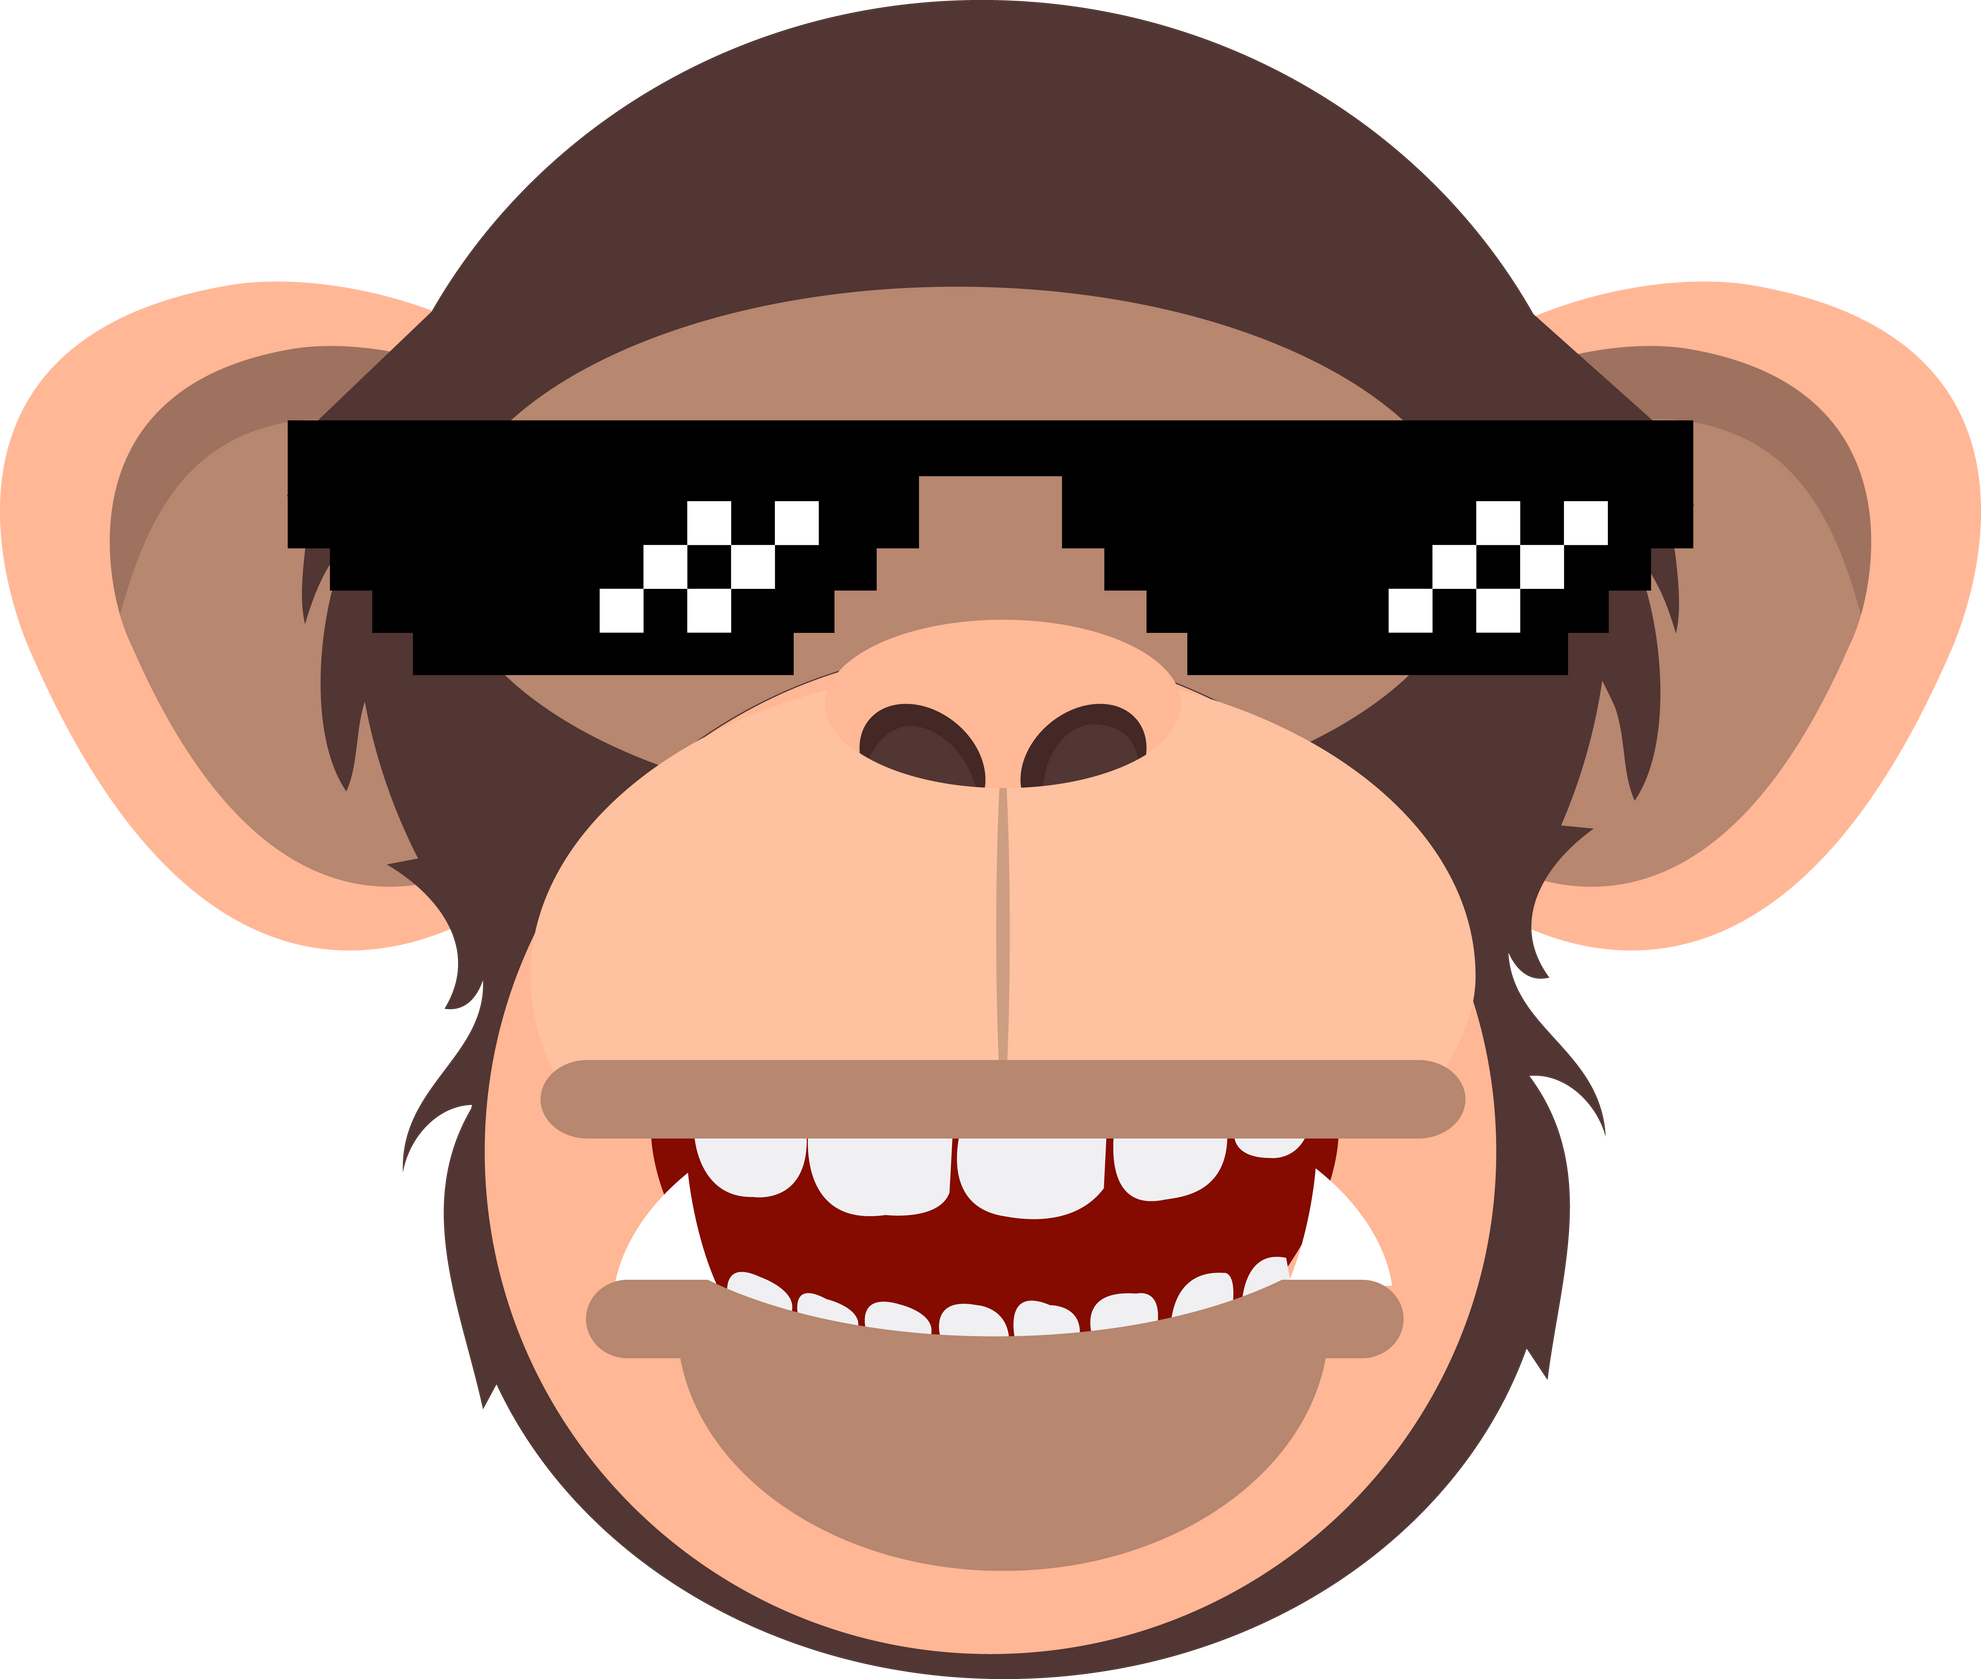 Cool monkey wearing glasses